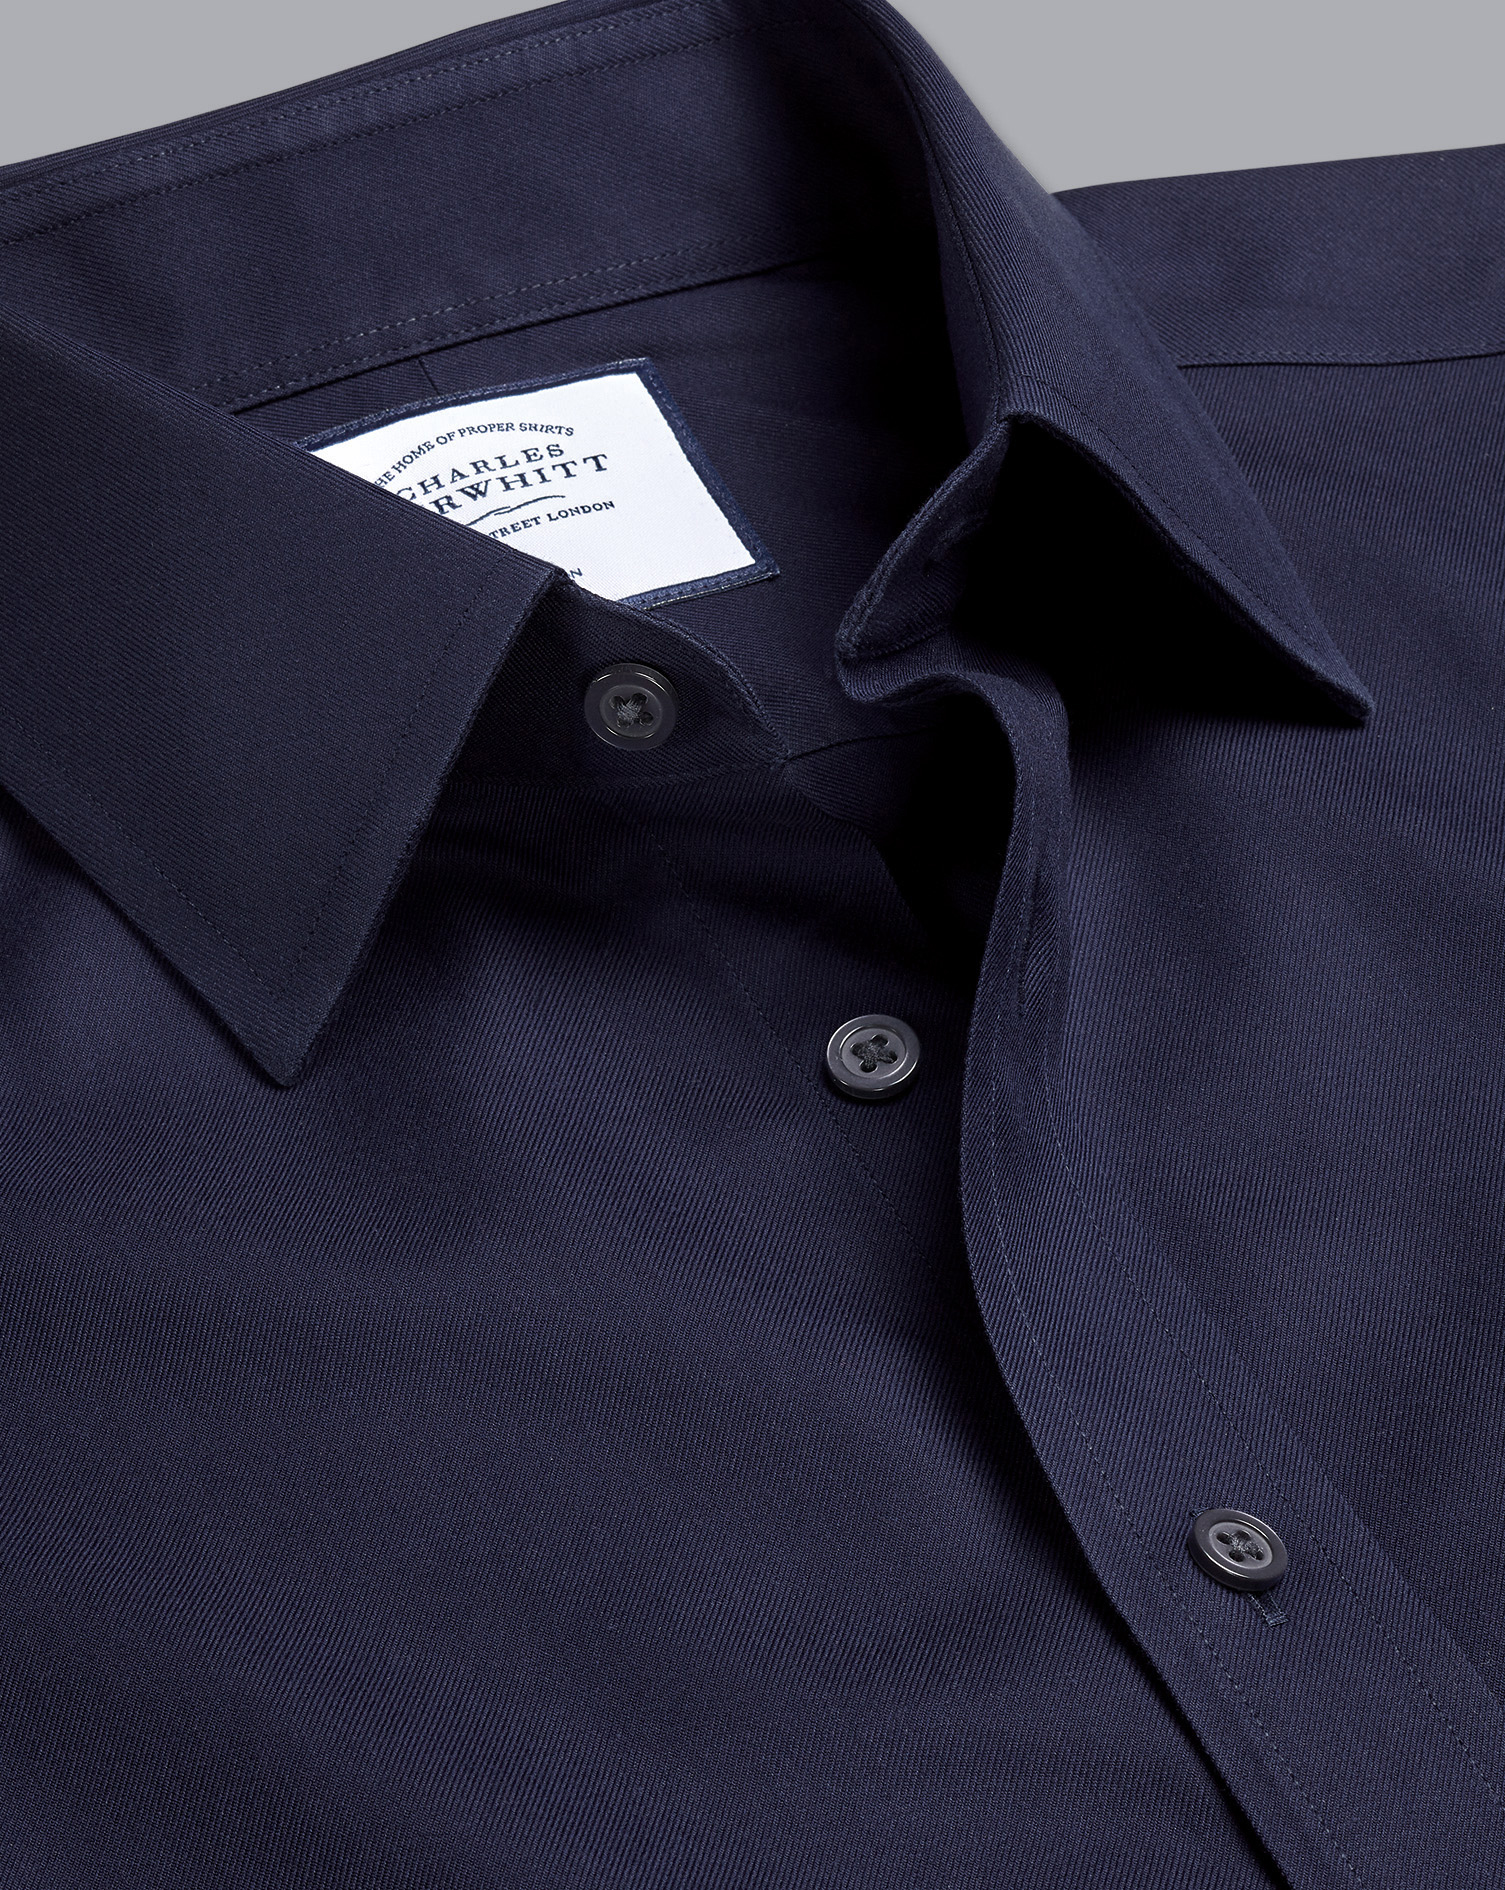 Men's Charles Tyrwhitt Non-Iron Twill Dress Shirt - Navy French Cuff Blue Size Medium Cotton
